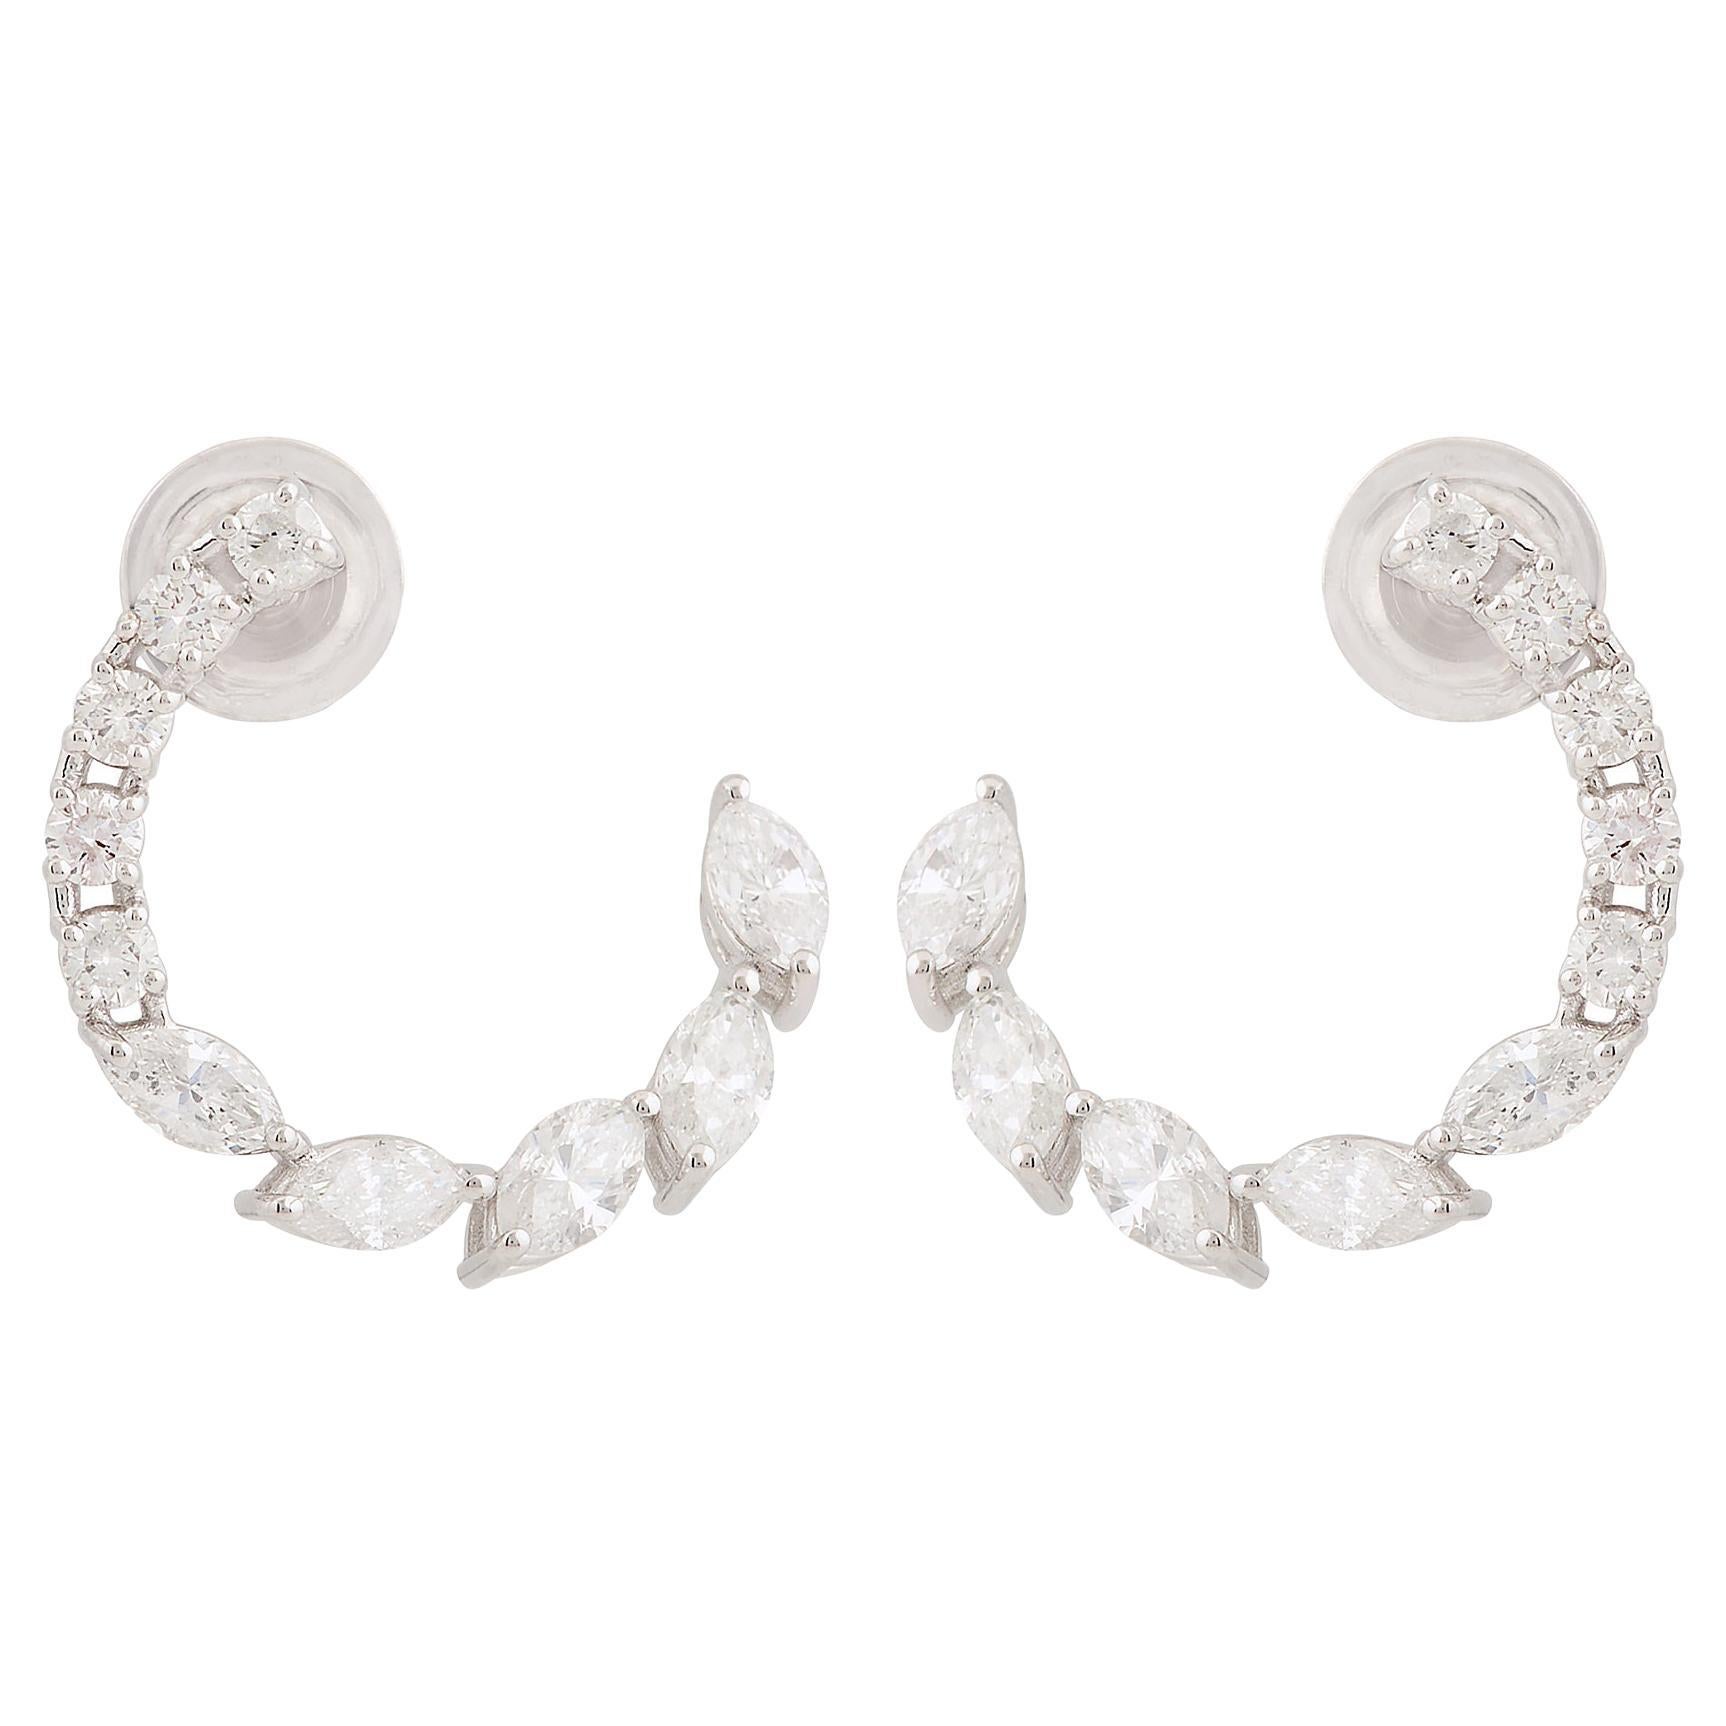 Real 2.49 Carat Marquise Diamond Stud Earrings 18k White Gold Handmade Jewelry